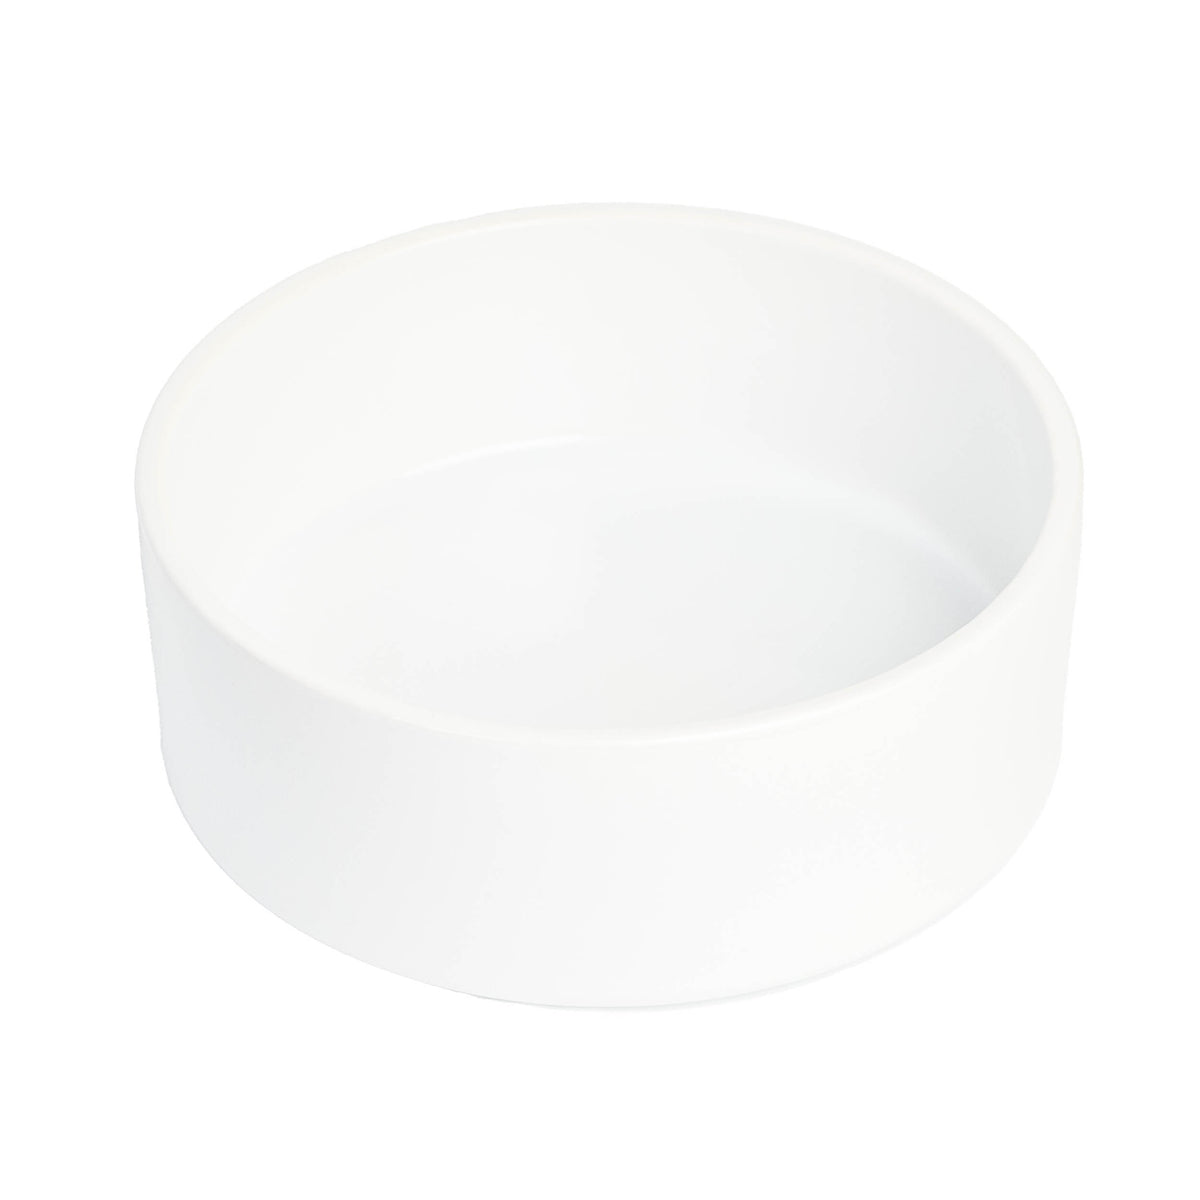 Personalised bowl for cats / ceramic - 22oz 650ml (design 6)